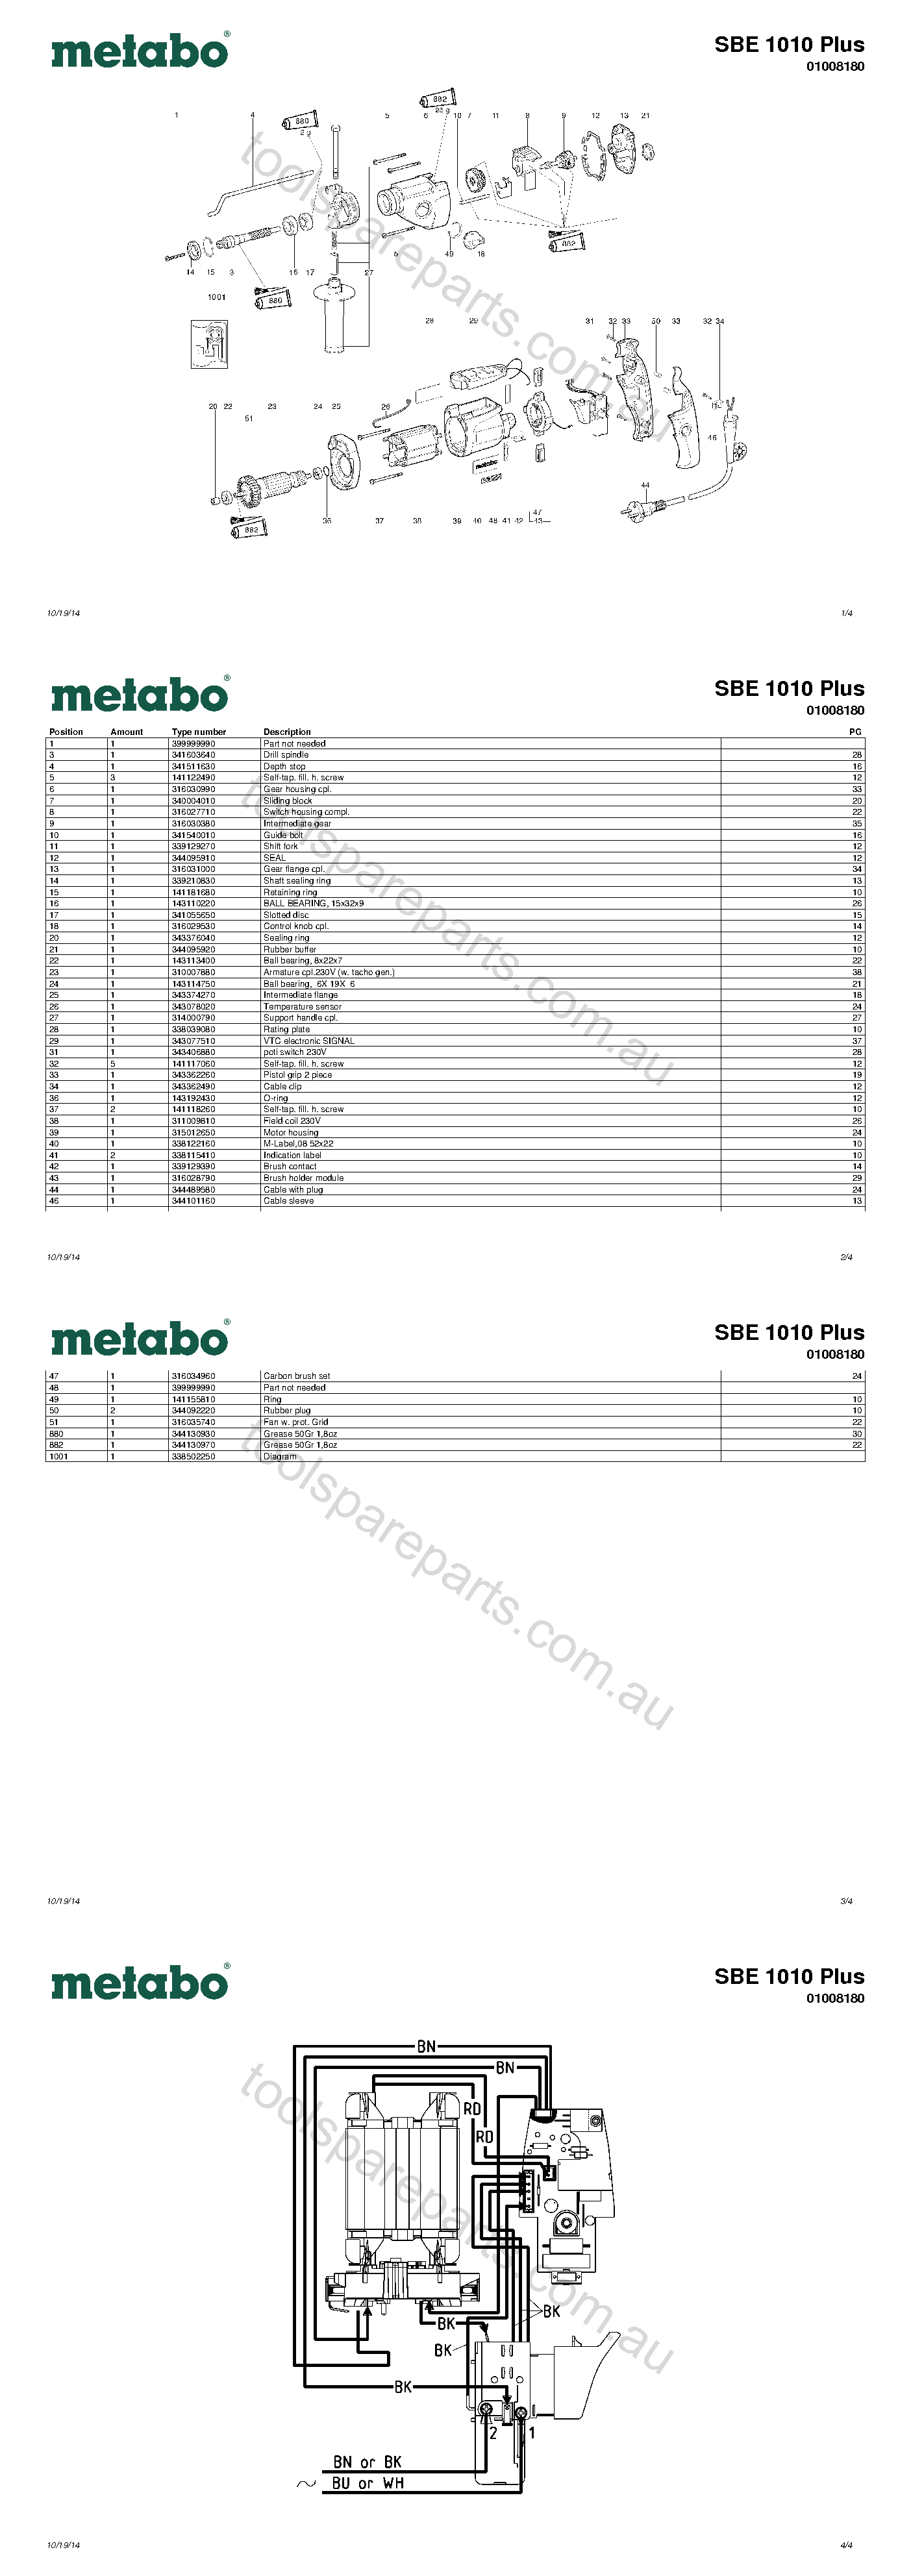 Metabo SBE 1010 Plus 01008180  Diagram 1